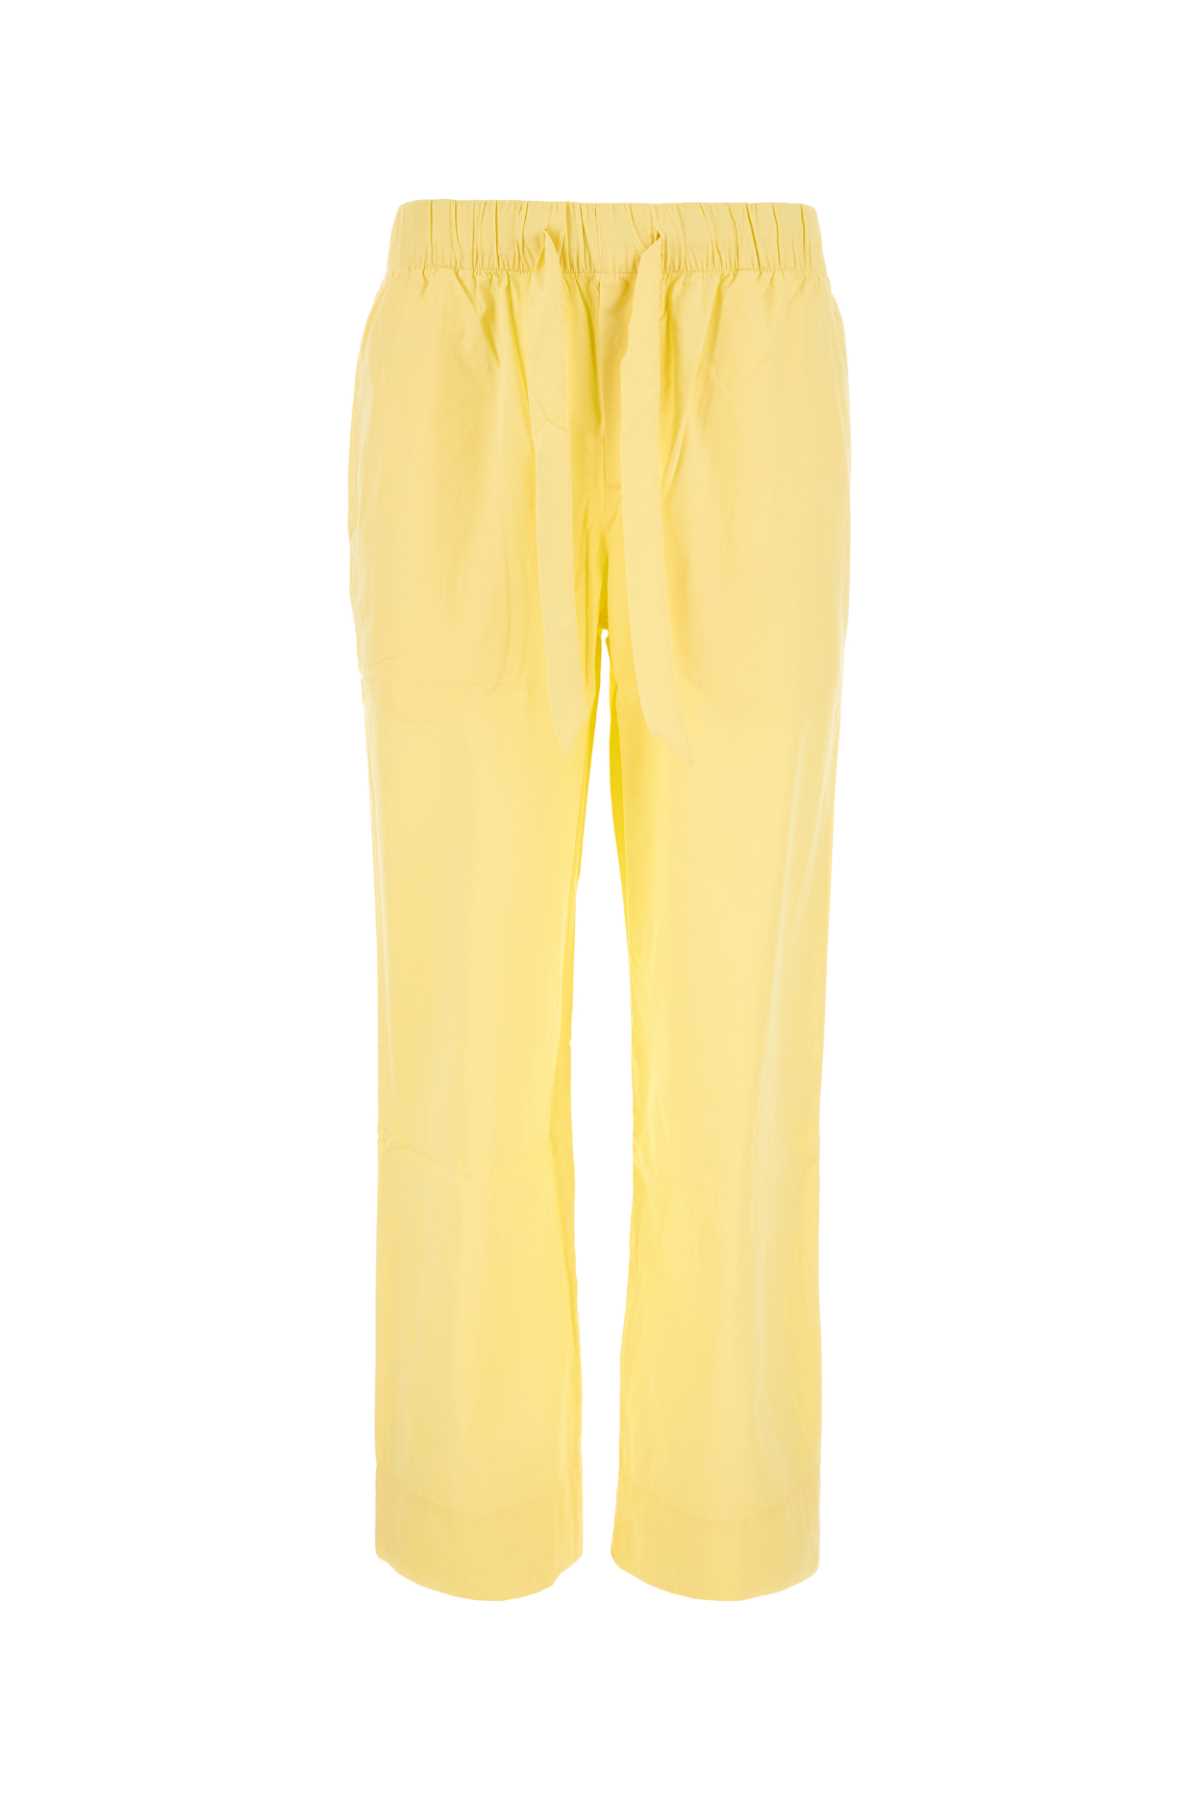 Shop Tekla Yellow Cotton Pyjama Pant